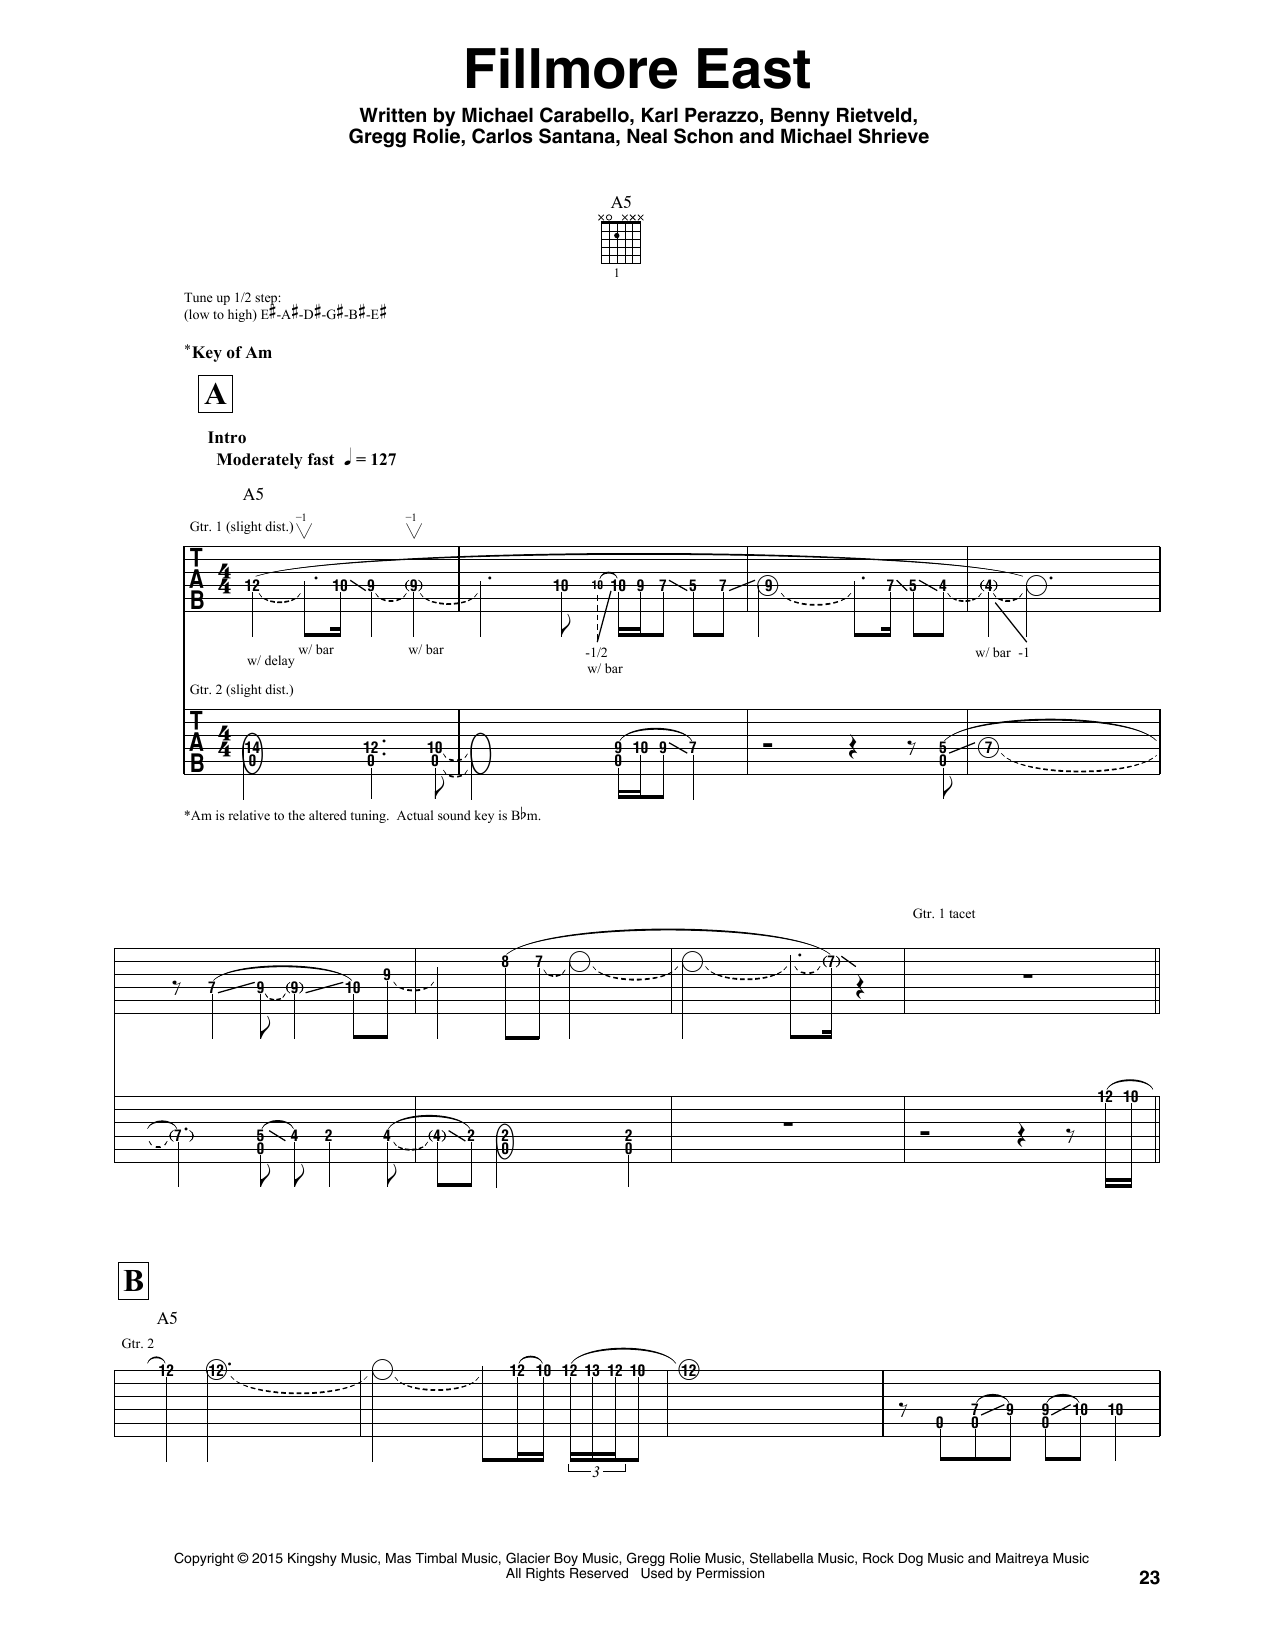 Santana Fillmore East Sheet Music Notes & Chords for Guitar Tab - Download or Print PDF